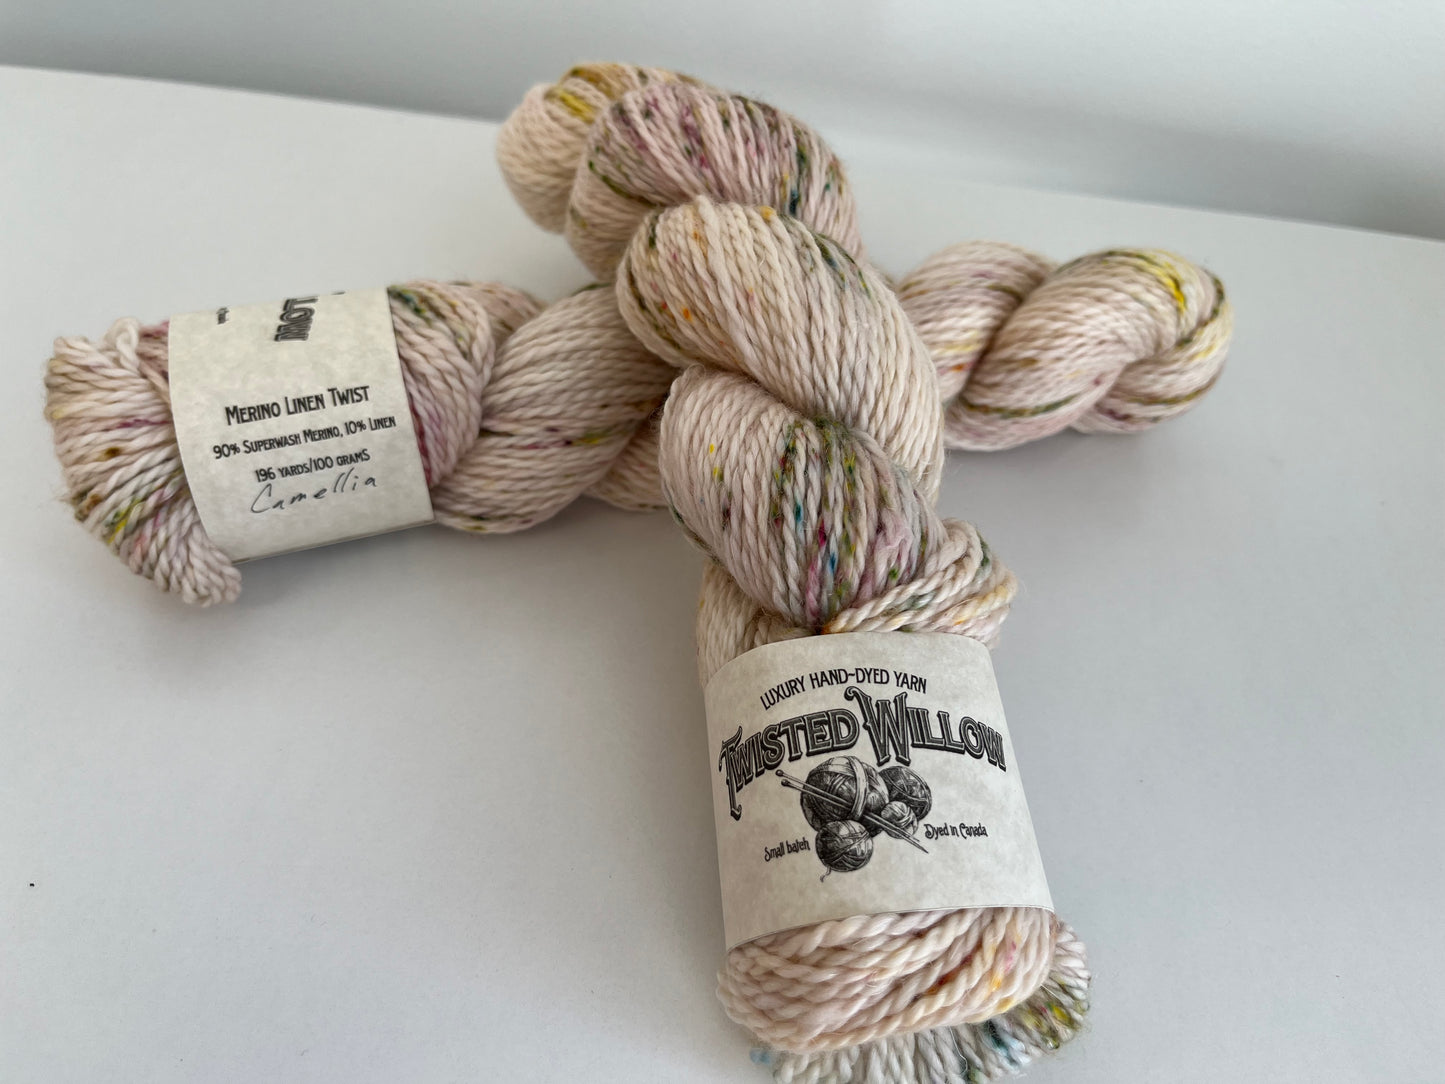 Twisted Willow Yarn; Merino Linen Twist; Camellia